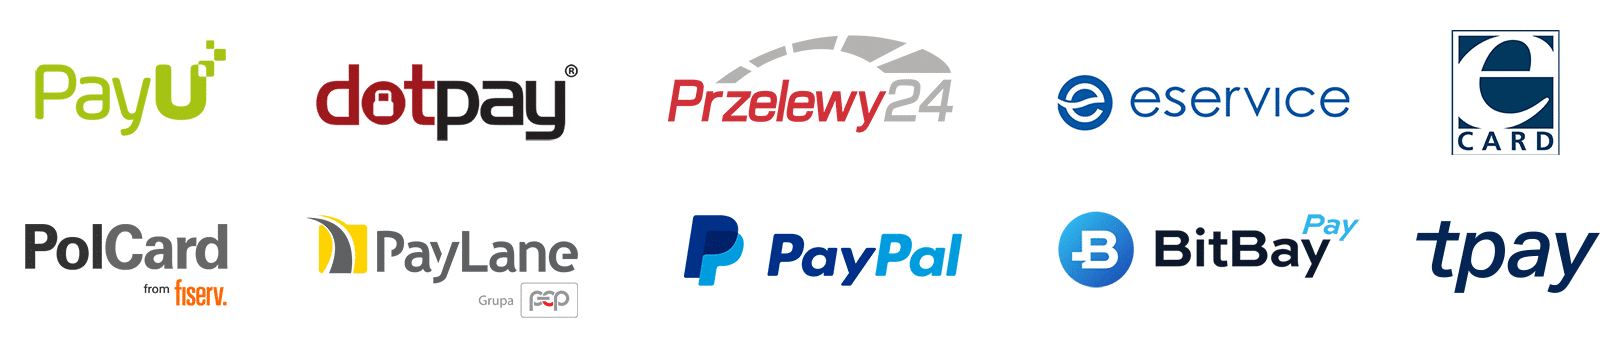 PayU Dotpay Przelewy24 eService eCard Polcard PayLane PayPal BitBayPay tpay